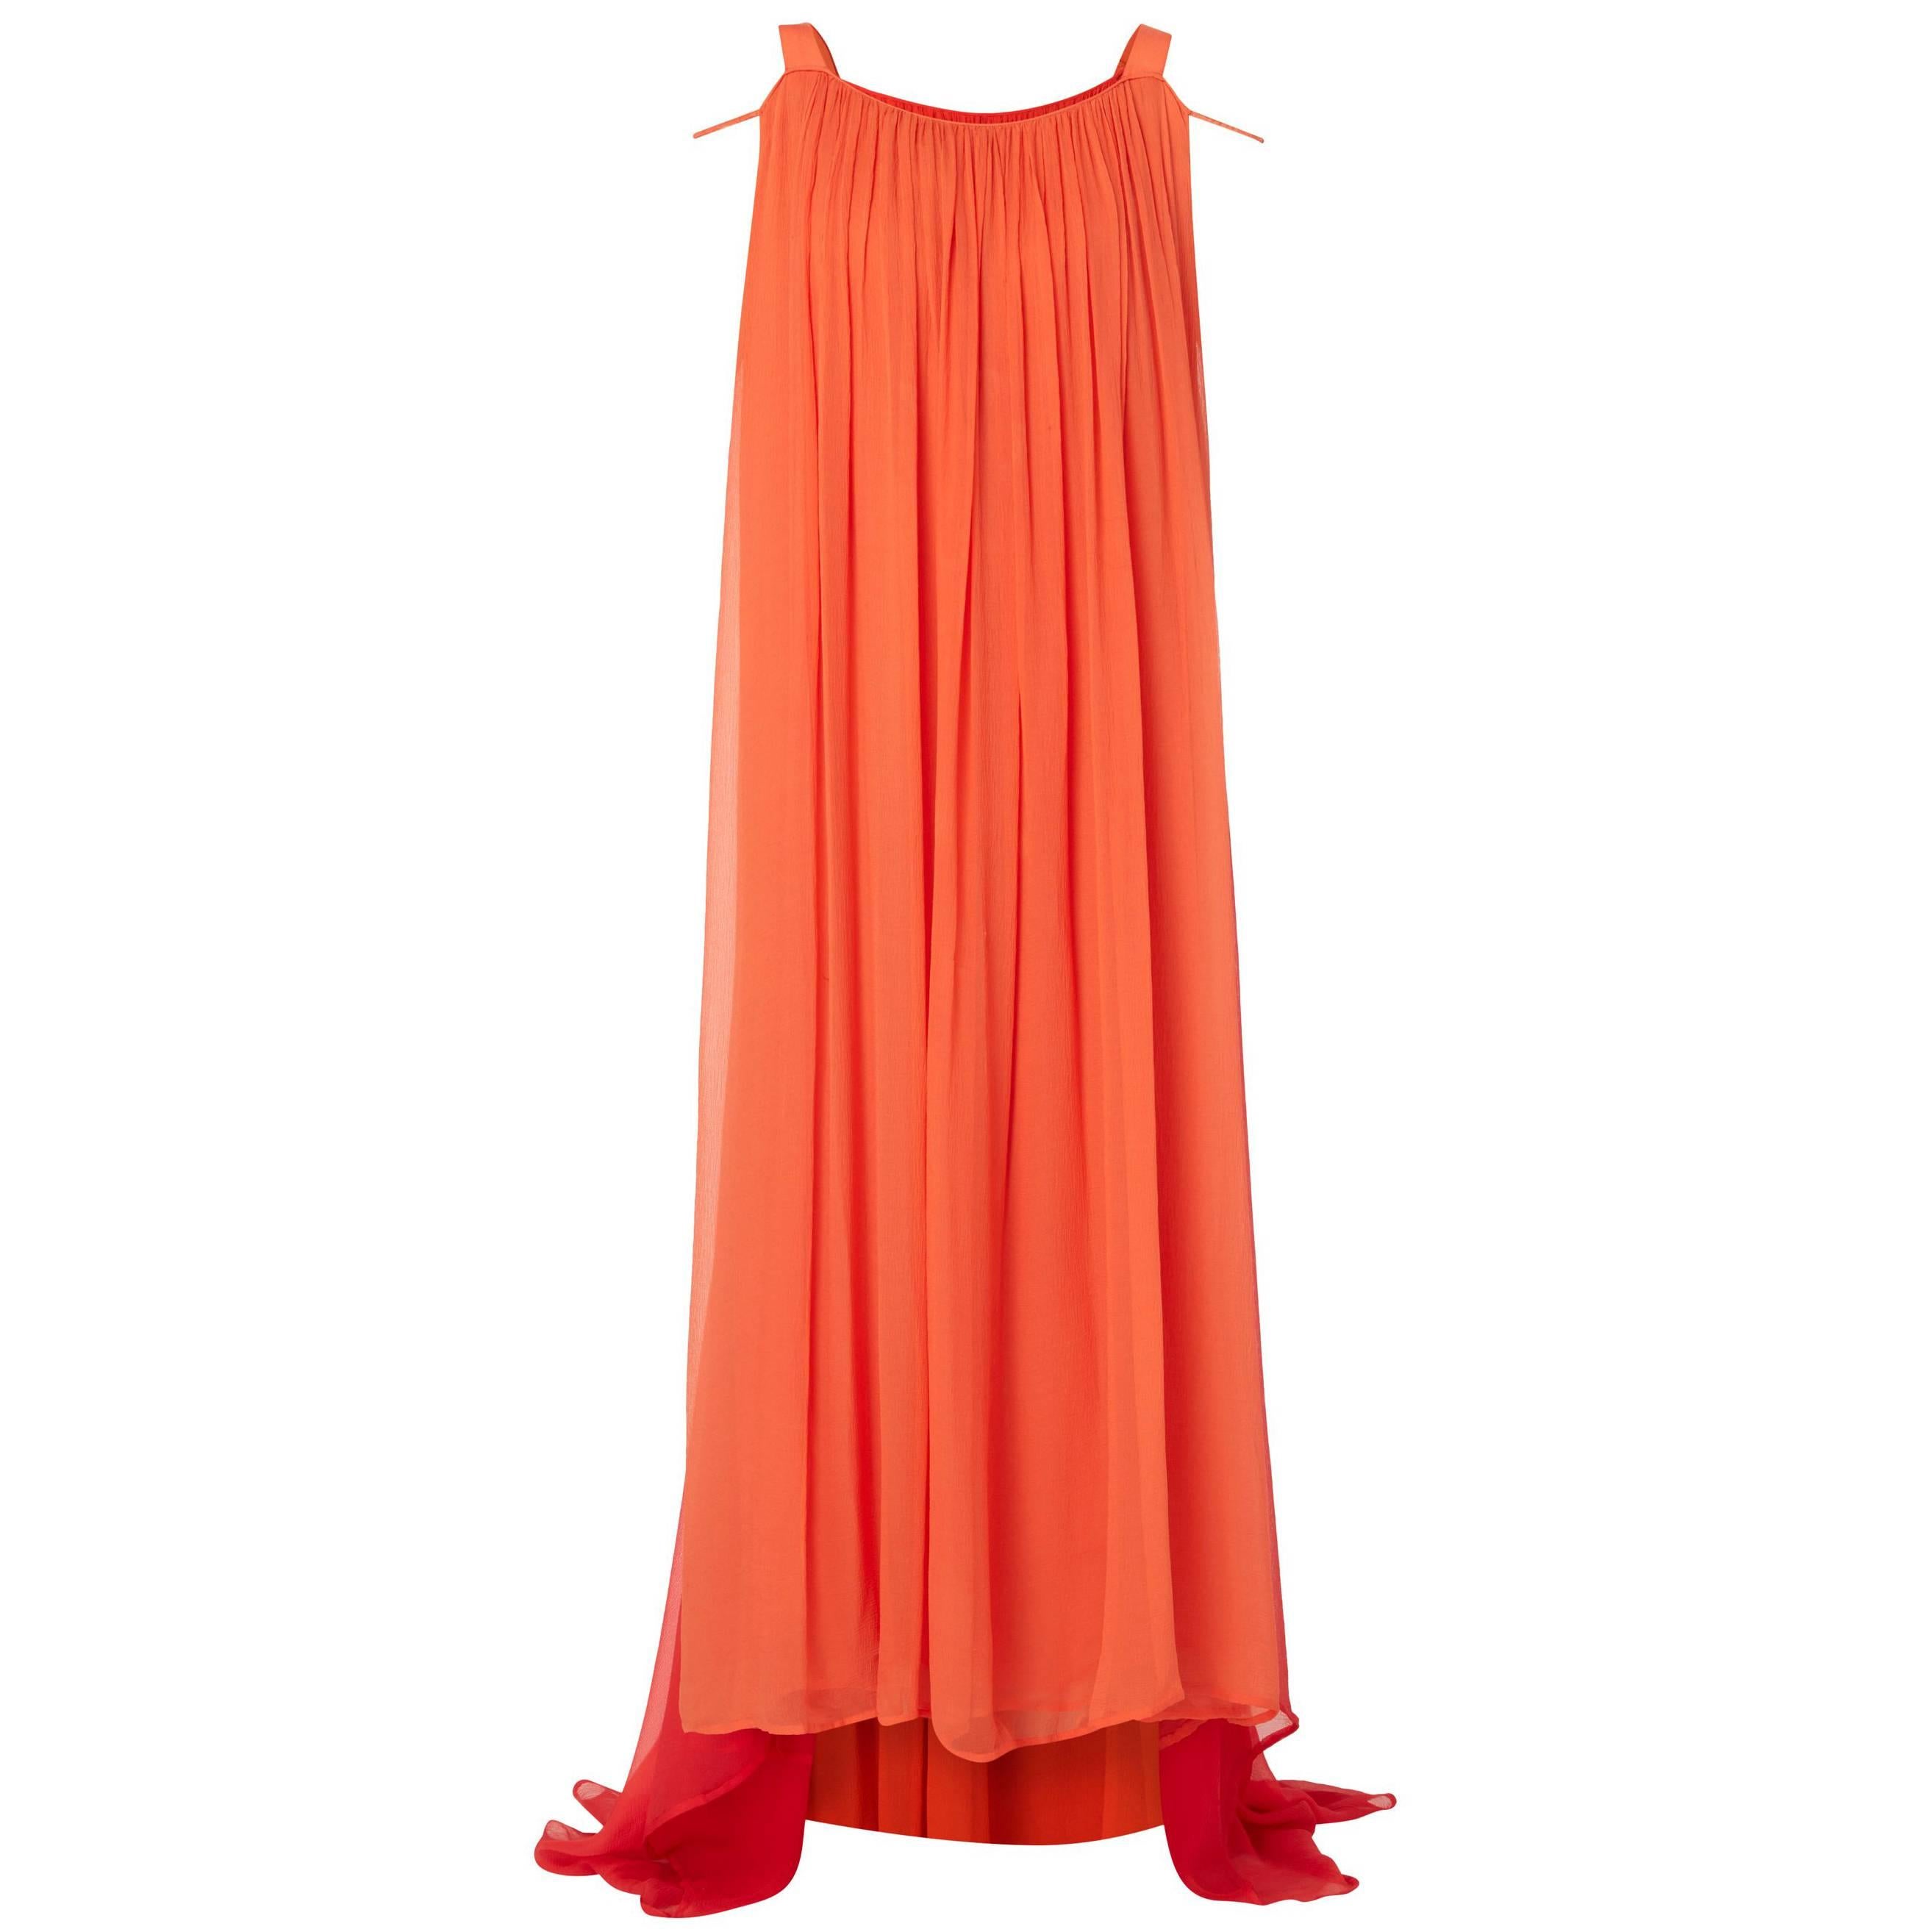 Yves Saint Laurent Haute couture orange & red dress, circa 1975 For Sale